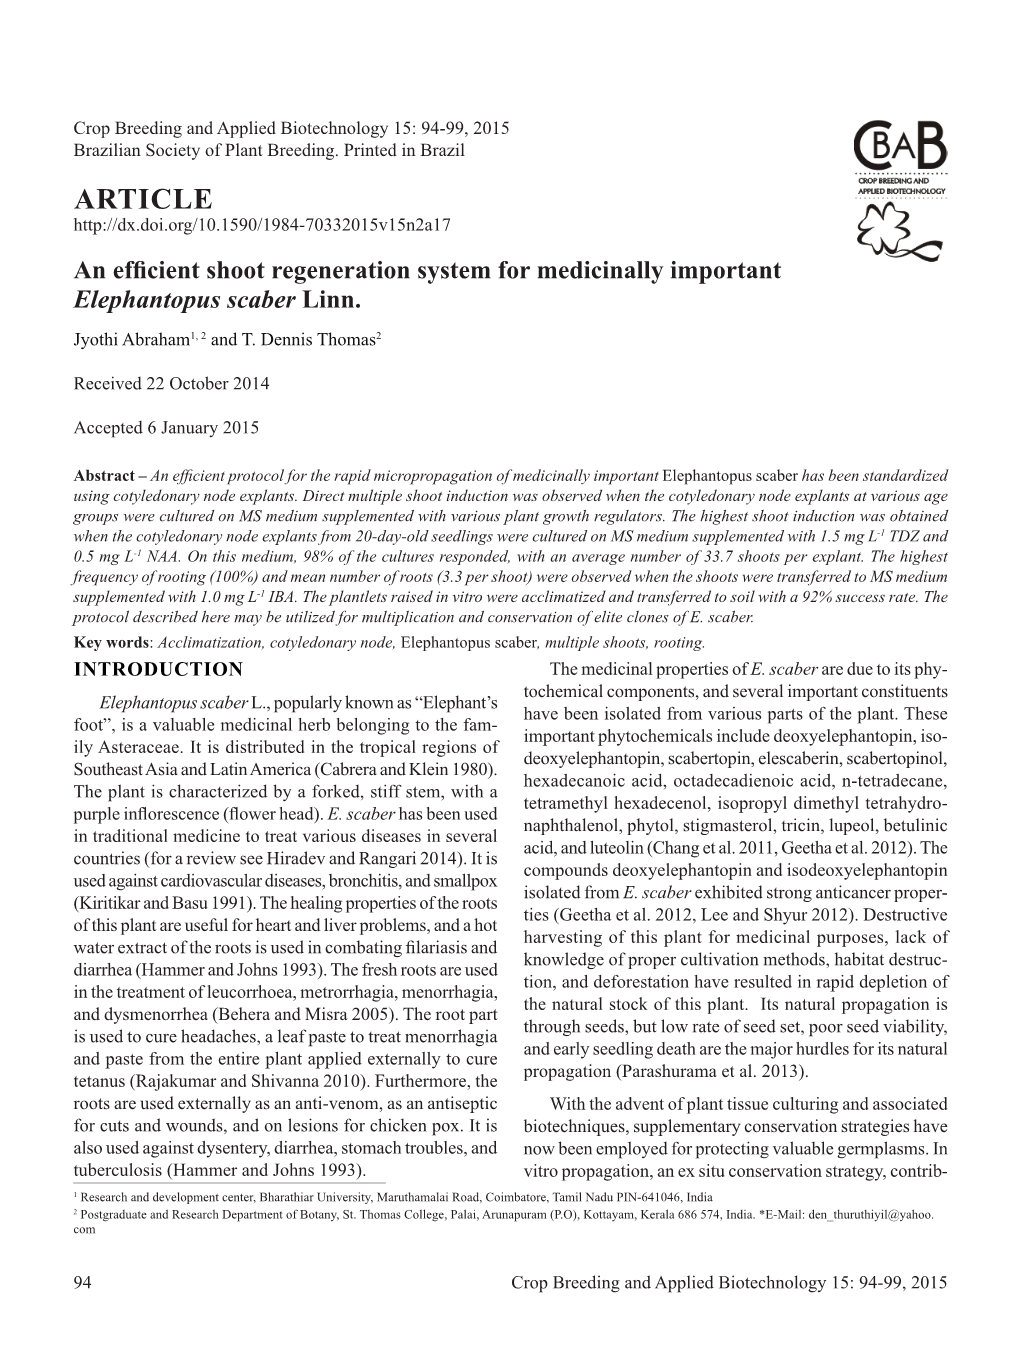 ARTICLE an Efficient Shoot Regeneration System for Medicinally Important Elephantopus Scaber Linn